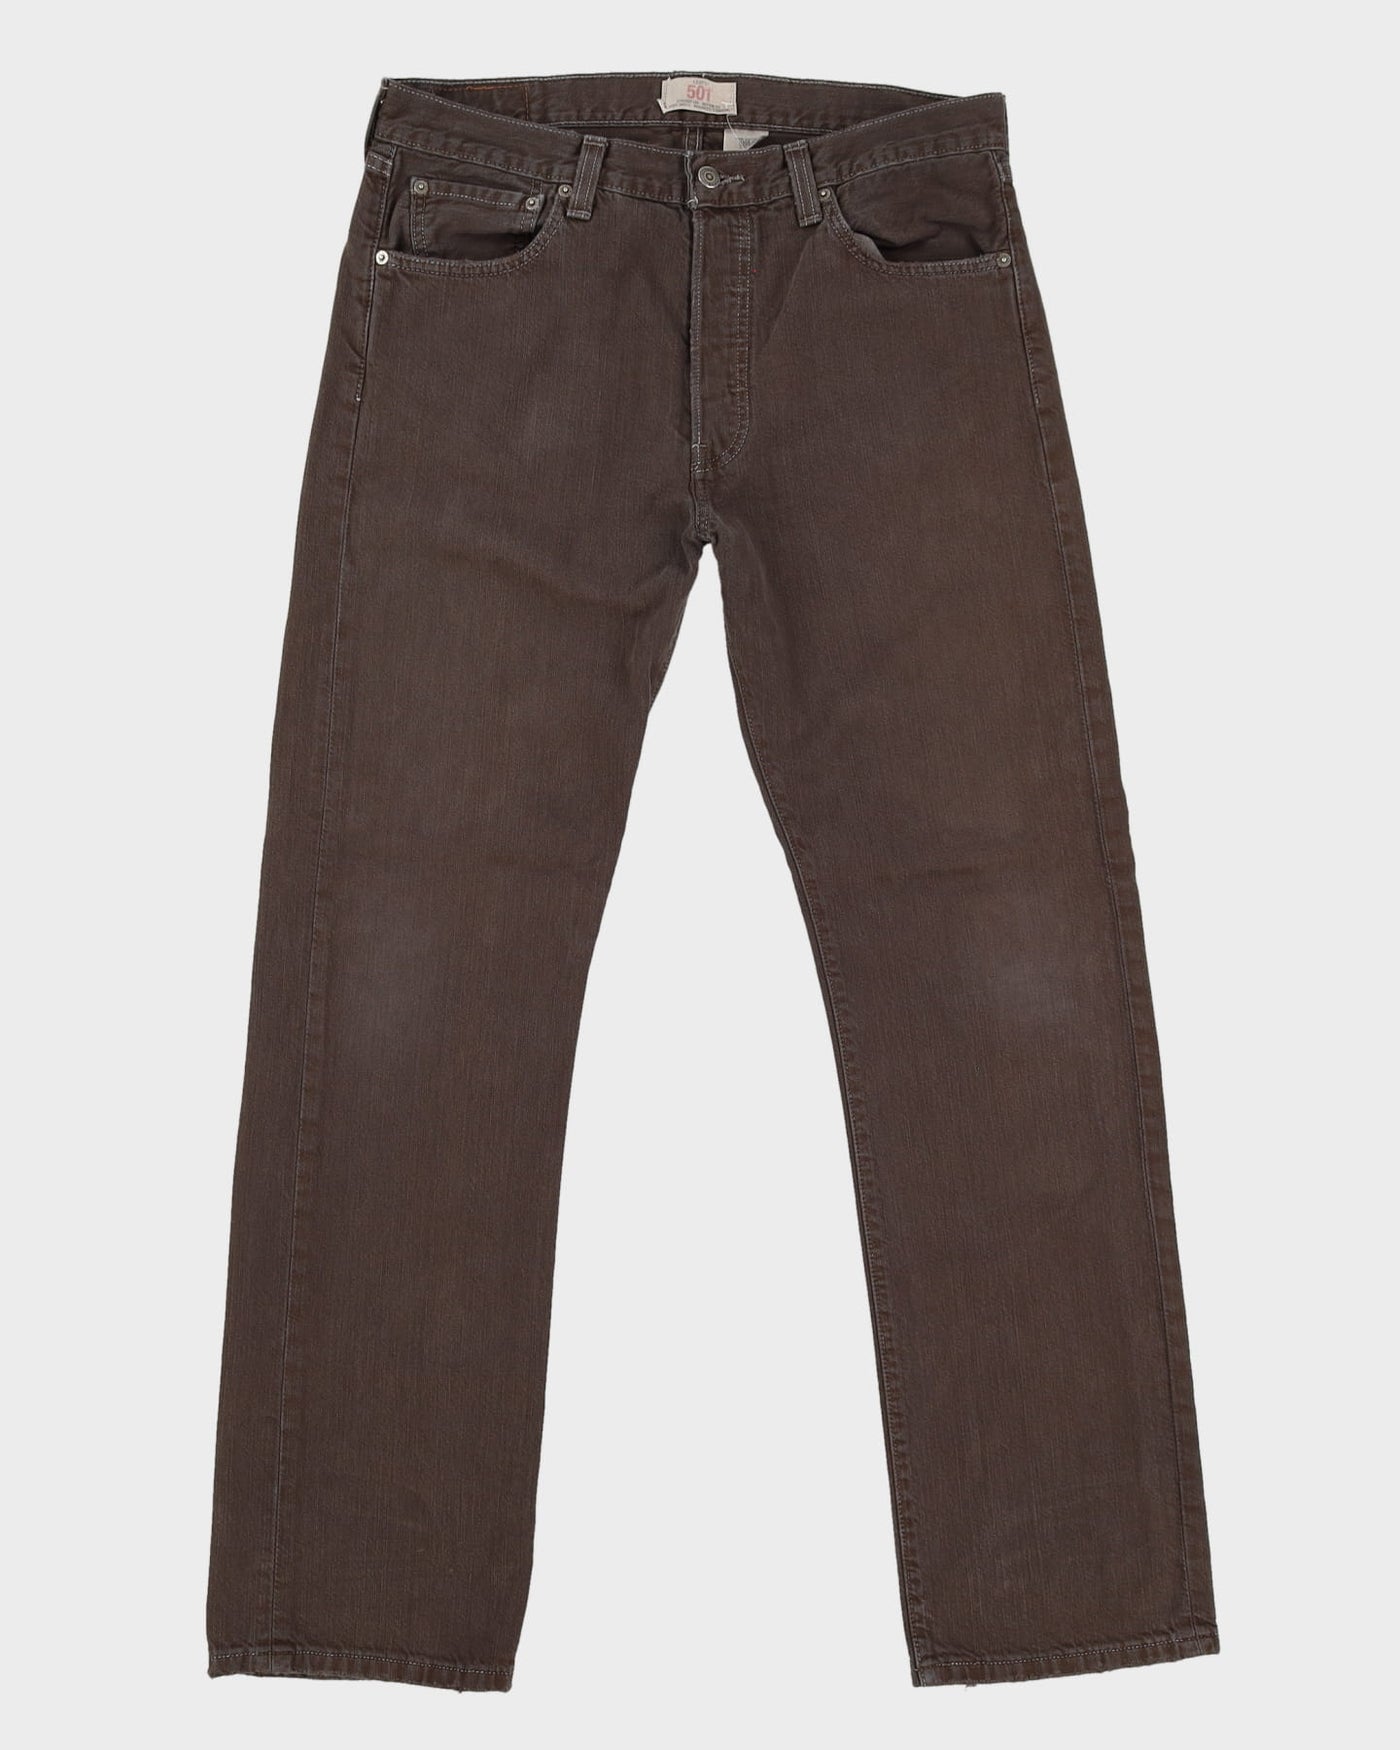 Levi's 501 Brown Jeans - W36 L33